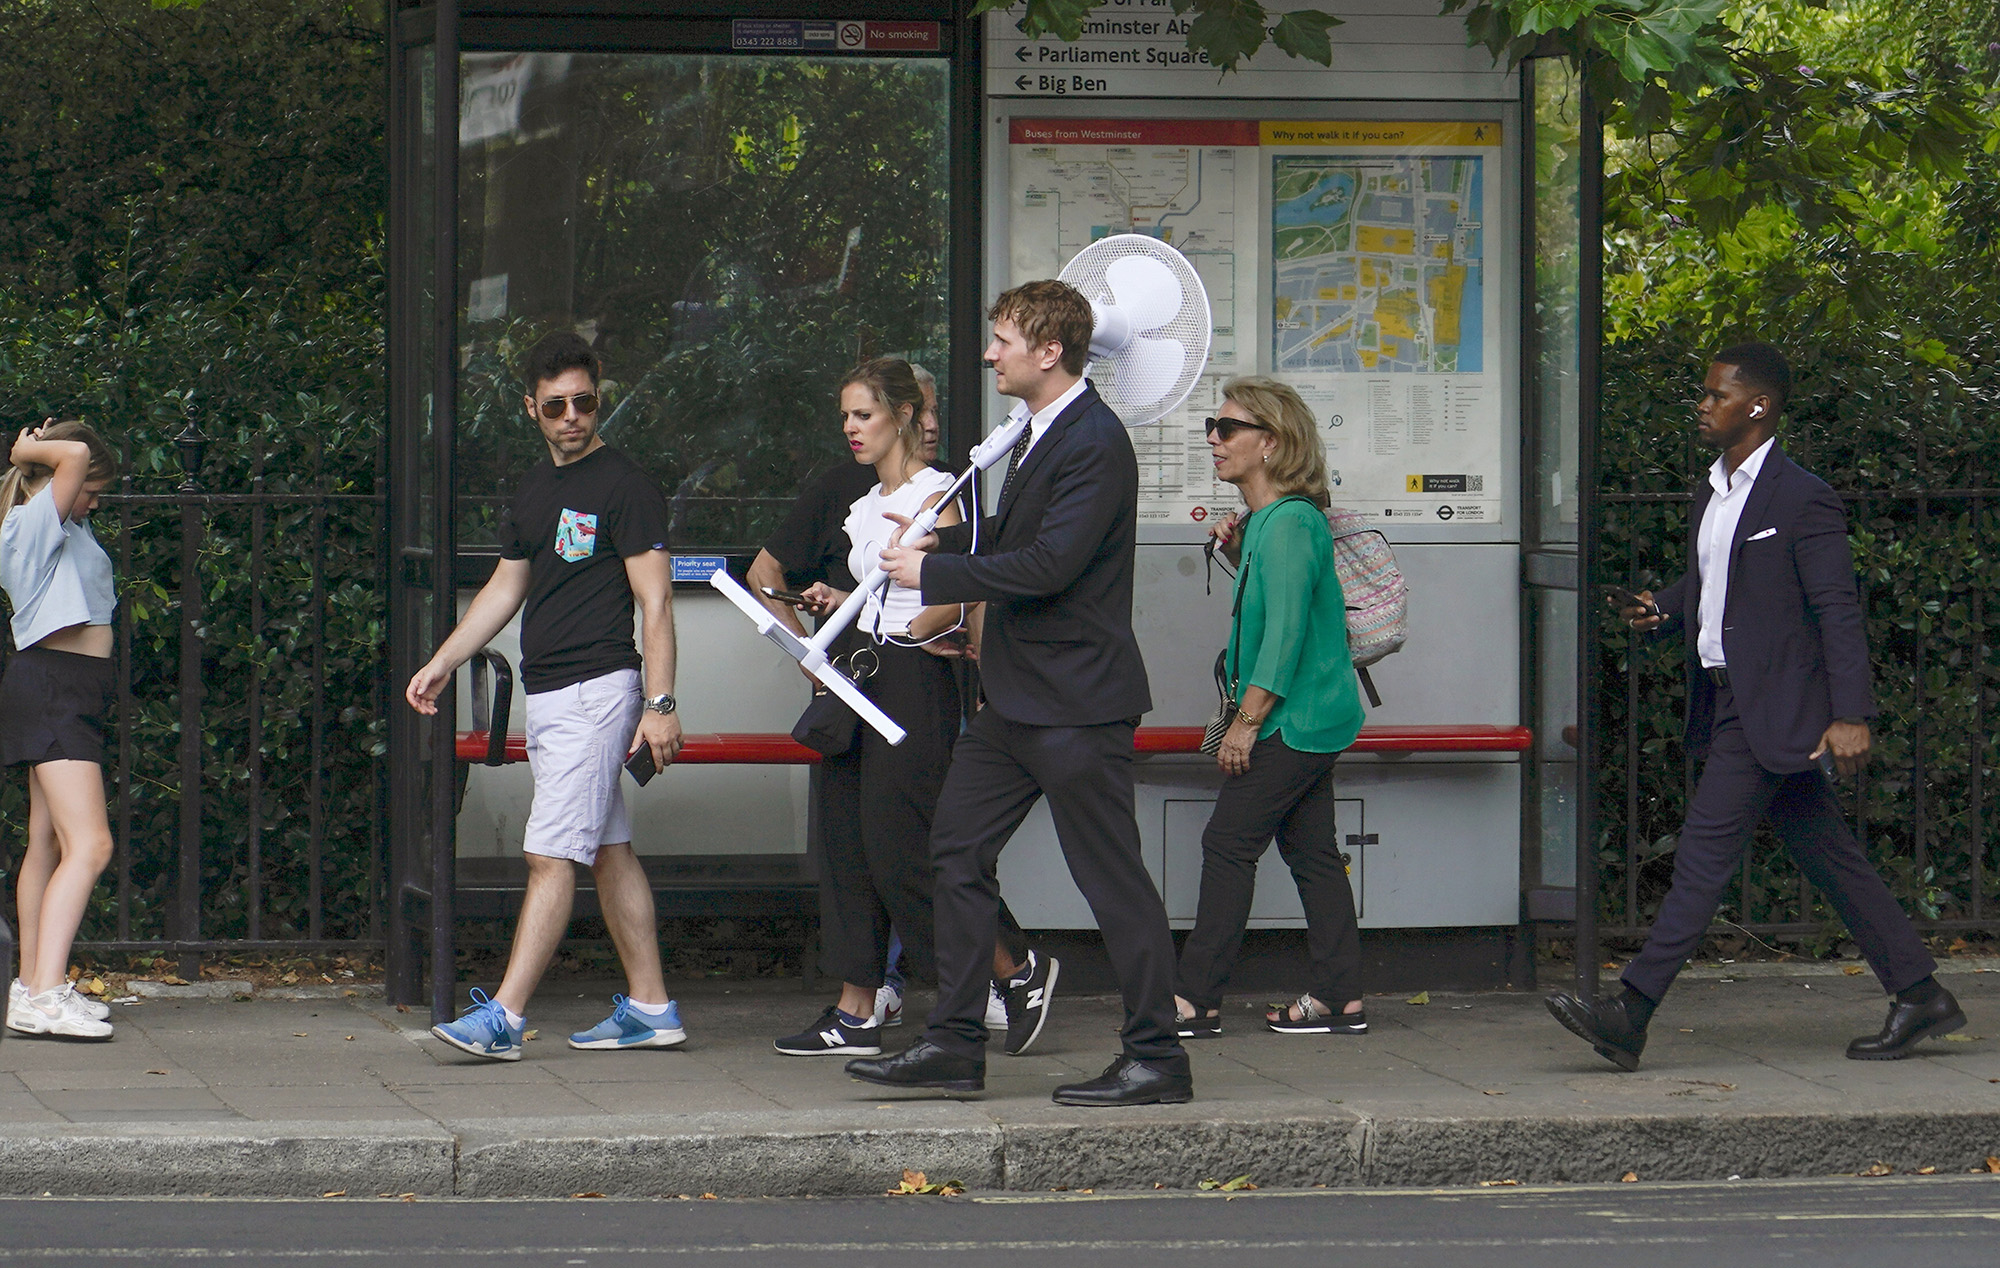 A man carries a fan as he walks through&nbsp;London, on&nbsp;July 12.&nbsp;